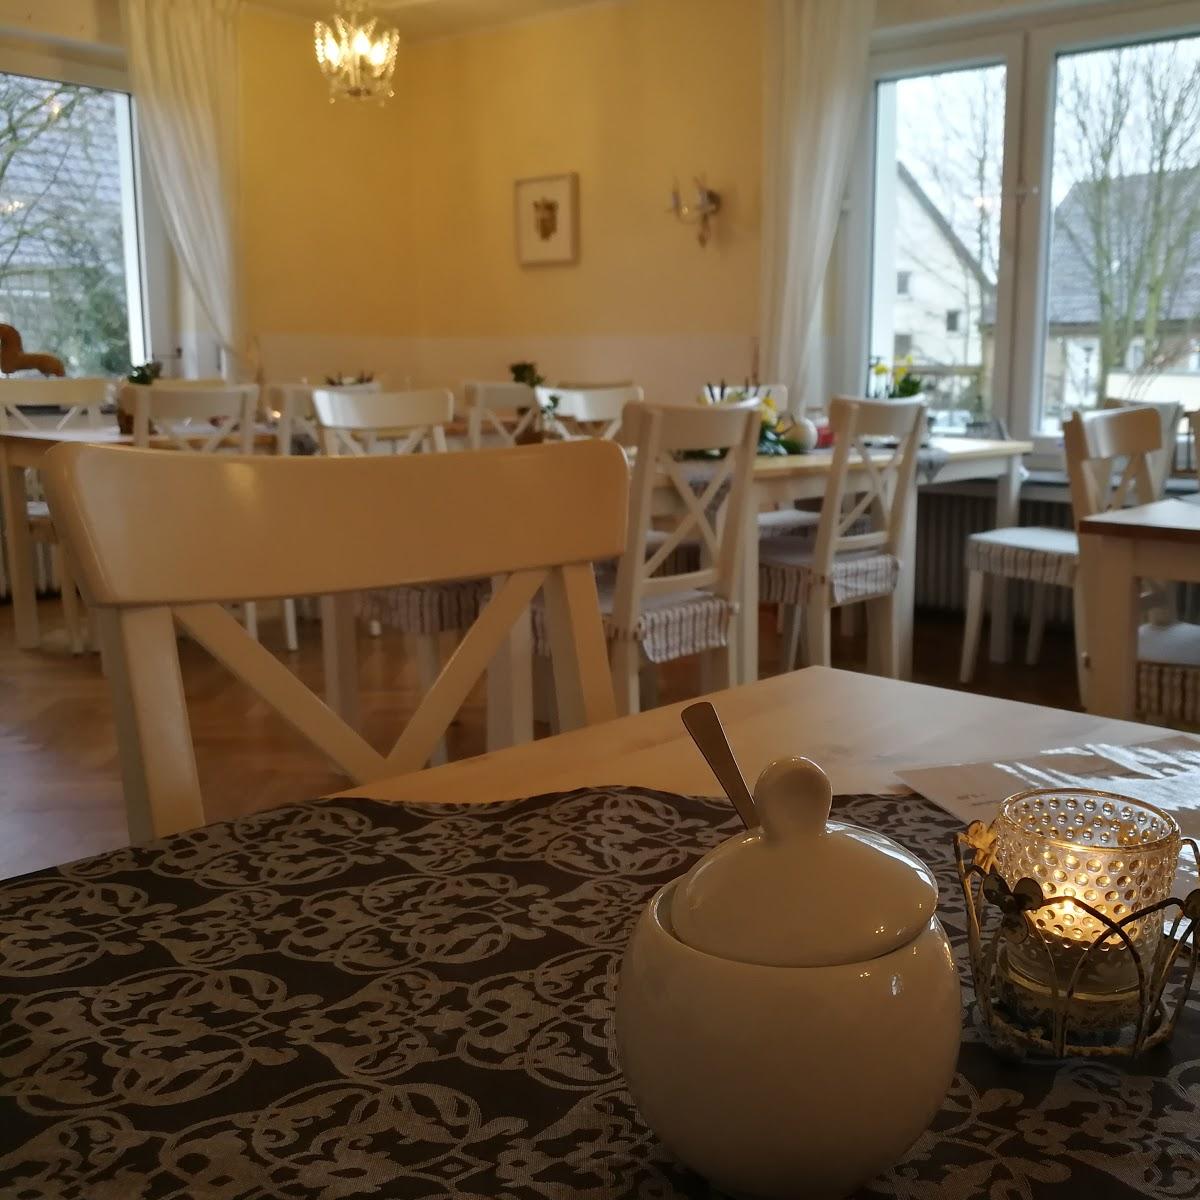 Restaurant "Das Kaffee Haus" in Sehnde